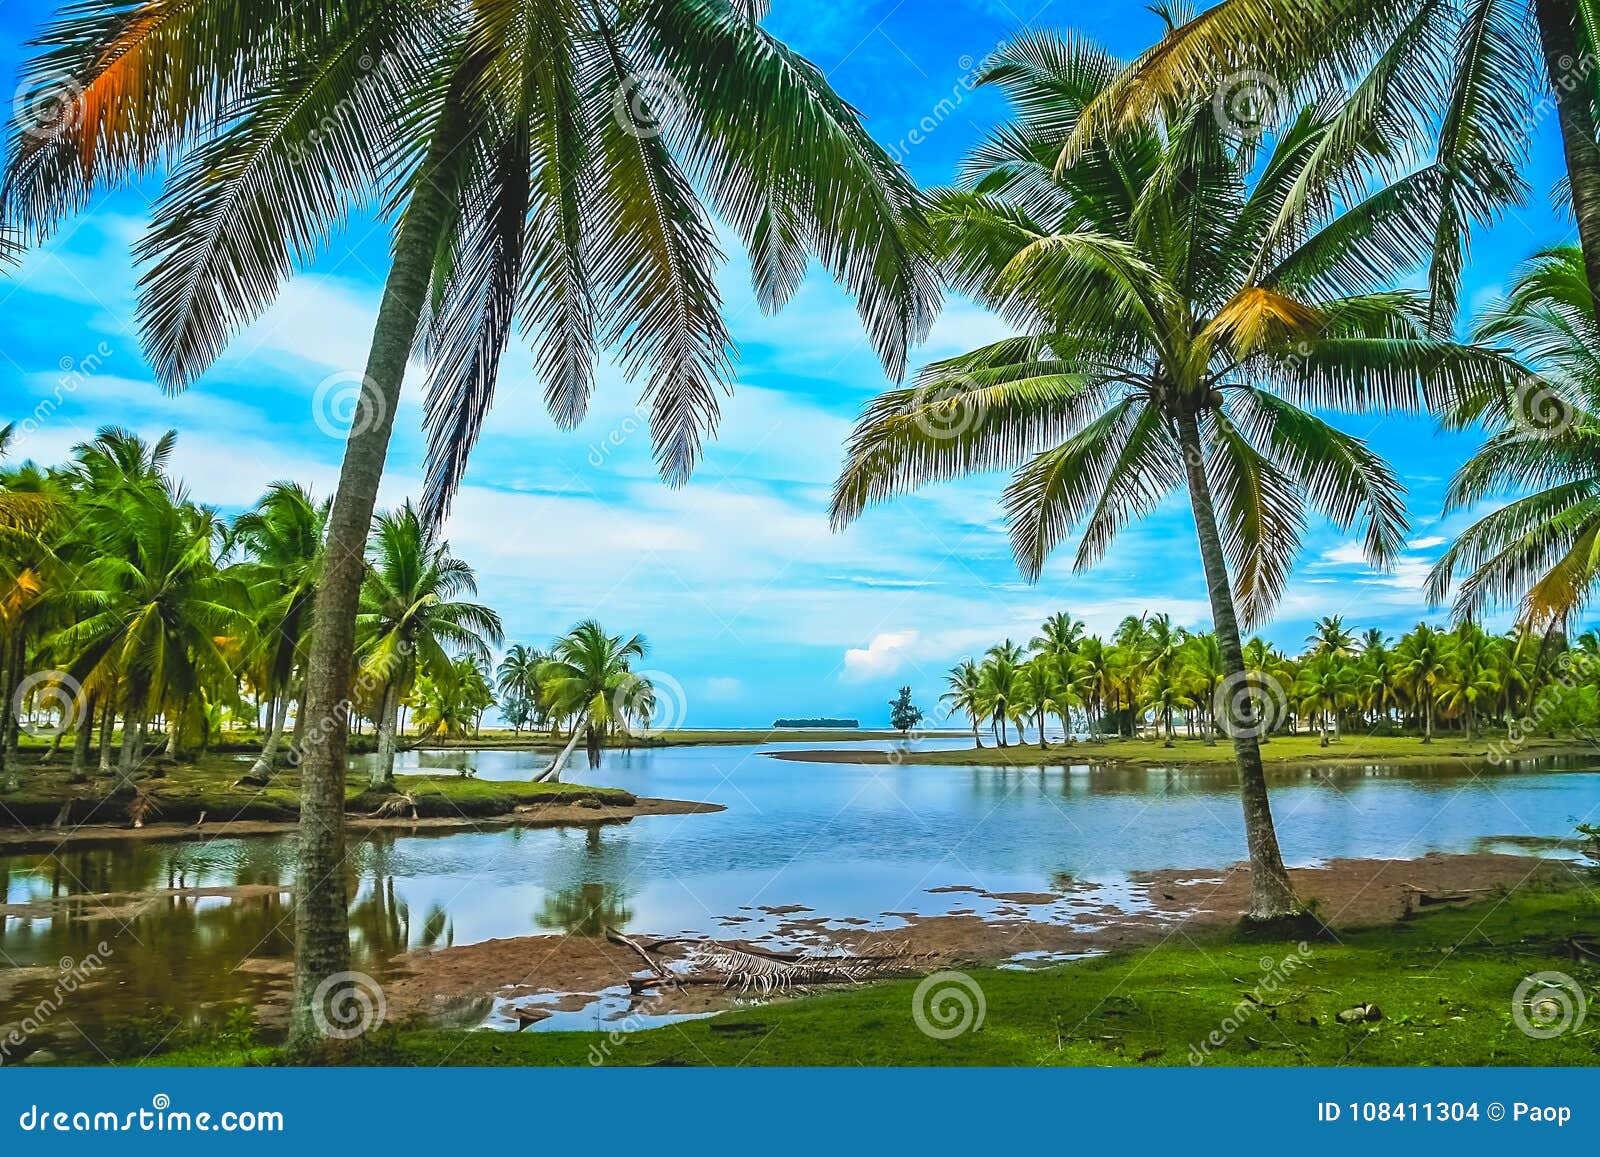 palmtrees on the coast of sumatra